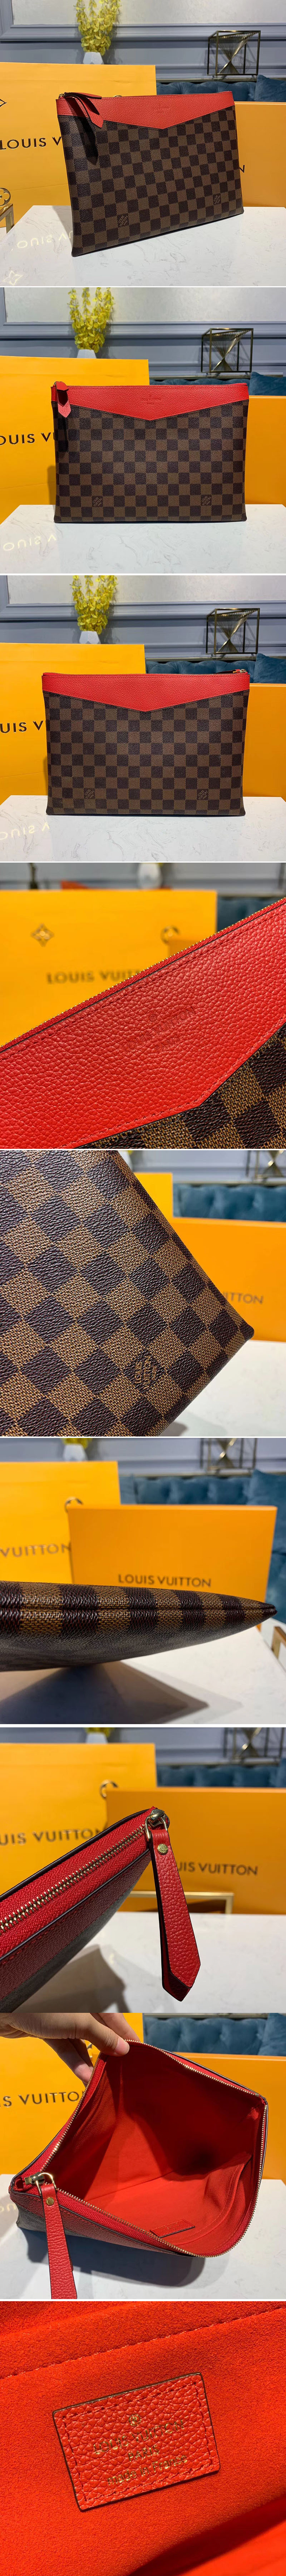 Replica Louis Vuitton N60262 LV Daily Pouch Bags Red Damier Ebene Canvas